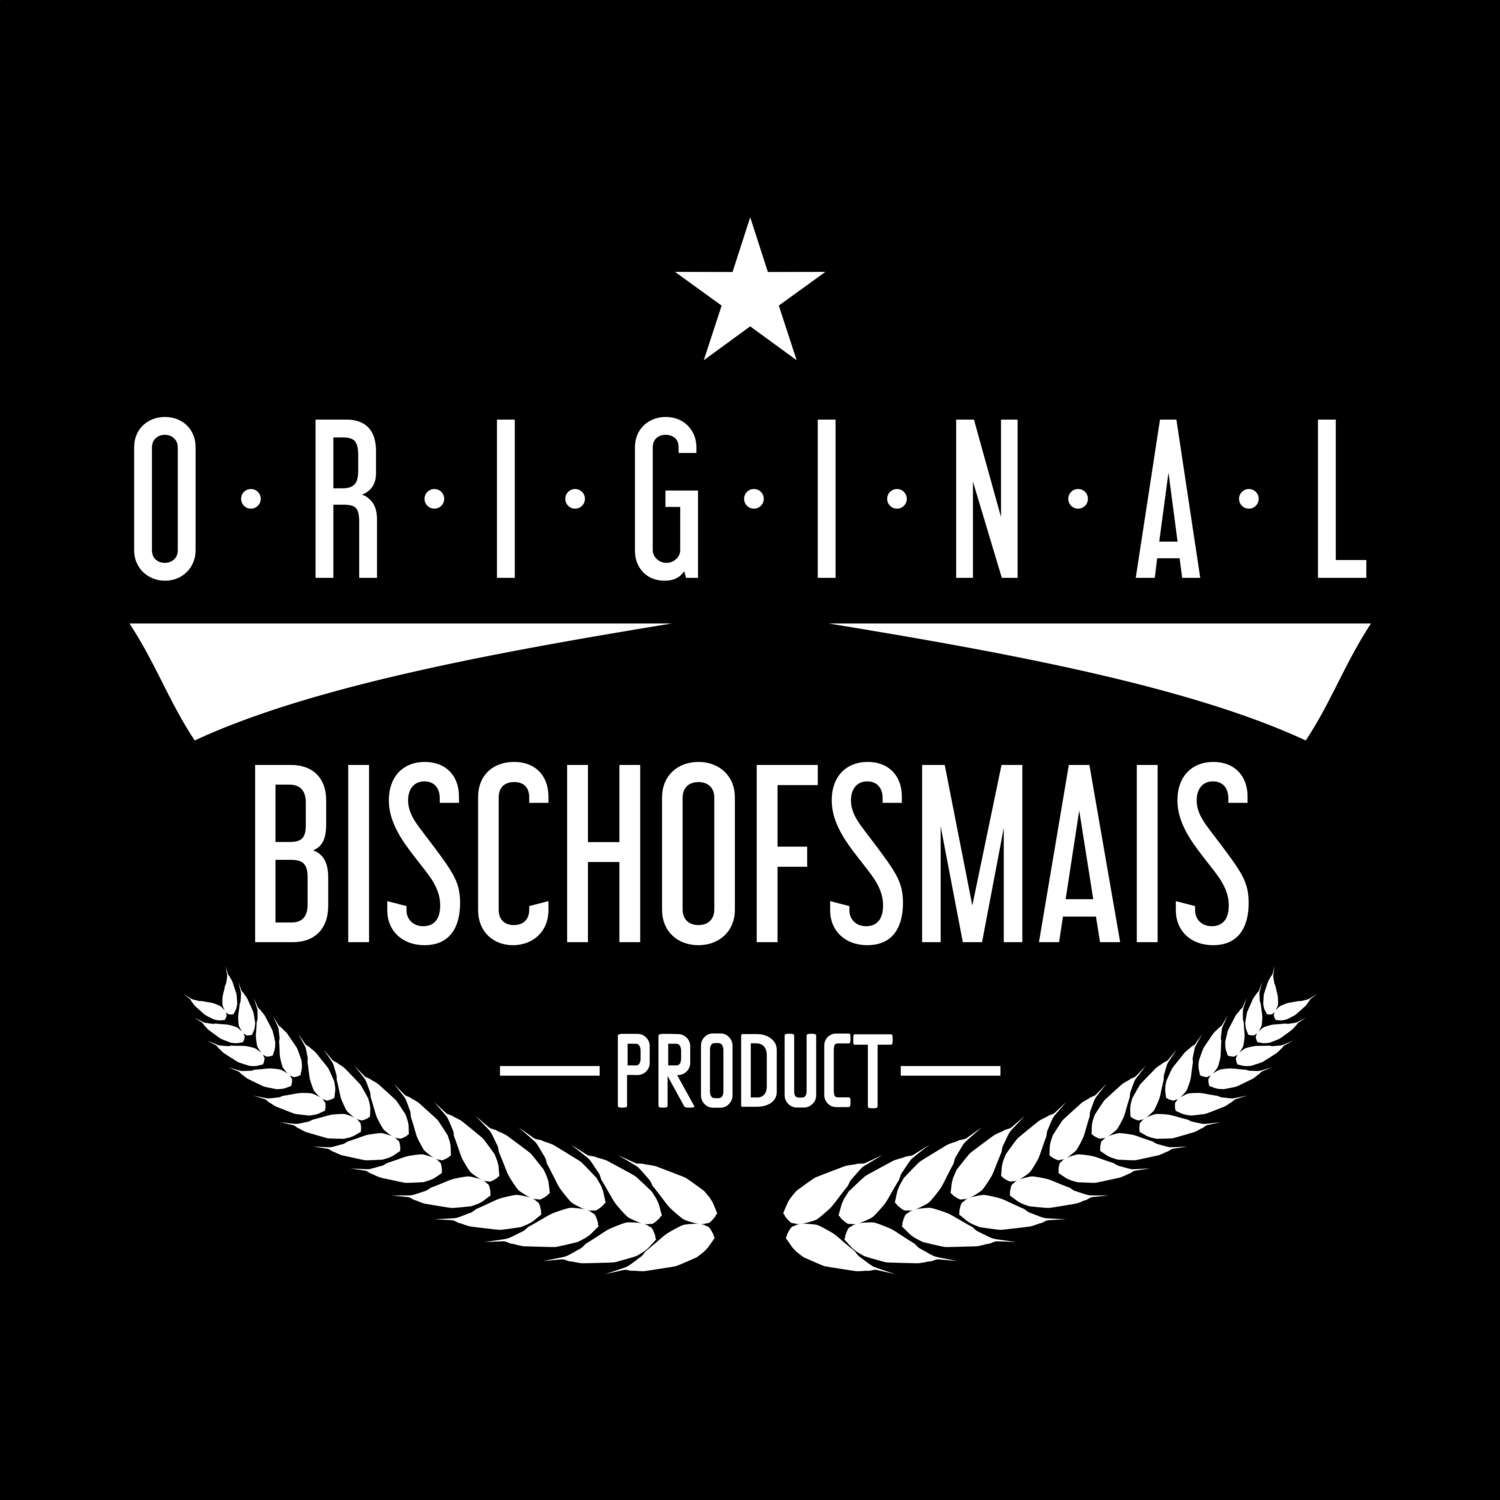 Bischofsmais T-Shirt »Original Product«